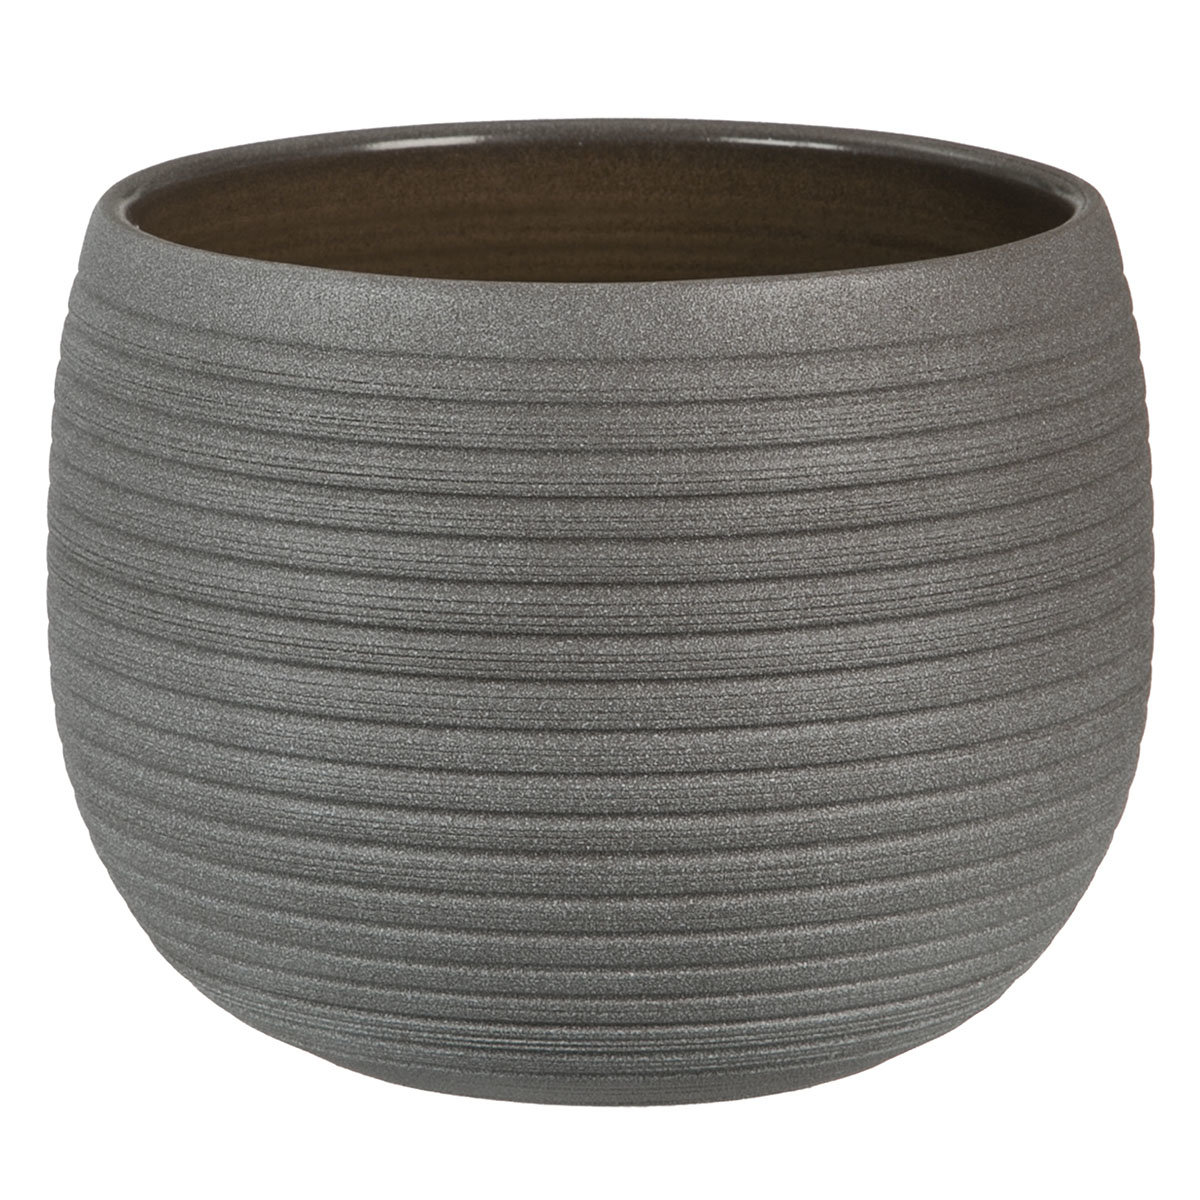 Keramik-Übertopf, rund, 12x16x16 cm, Umber Stone
